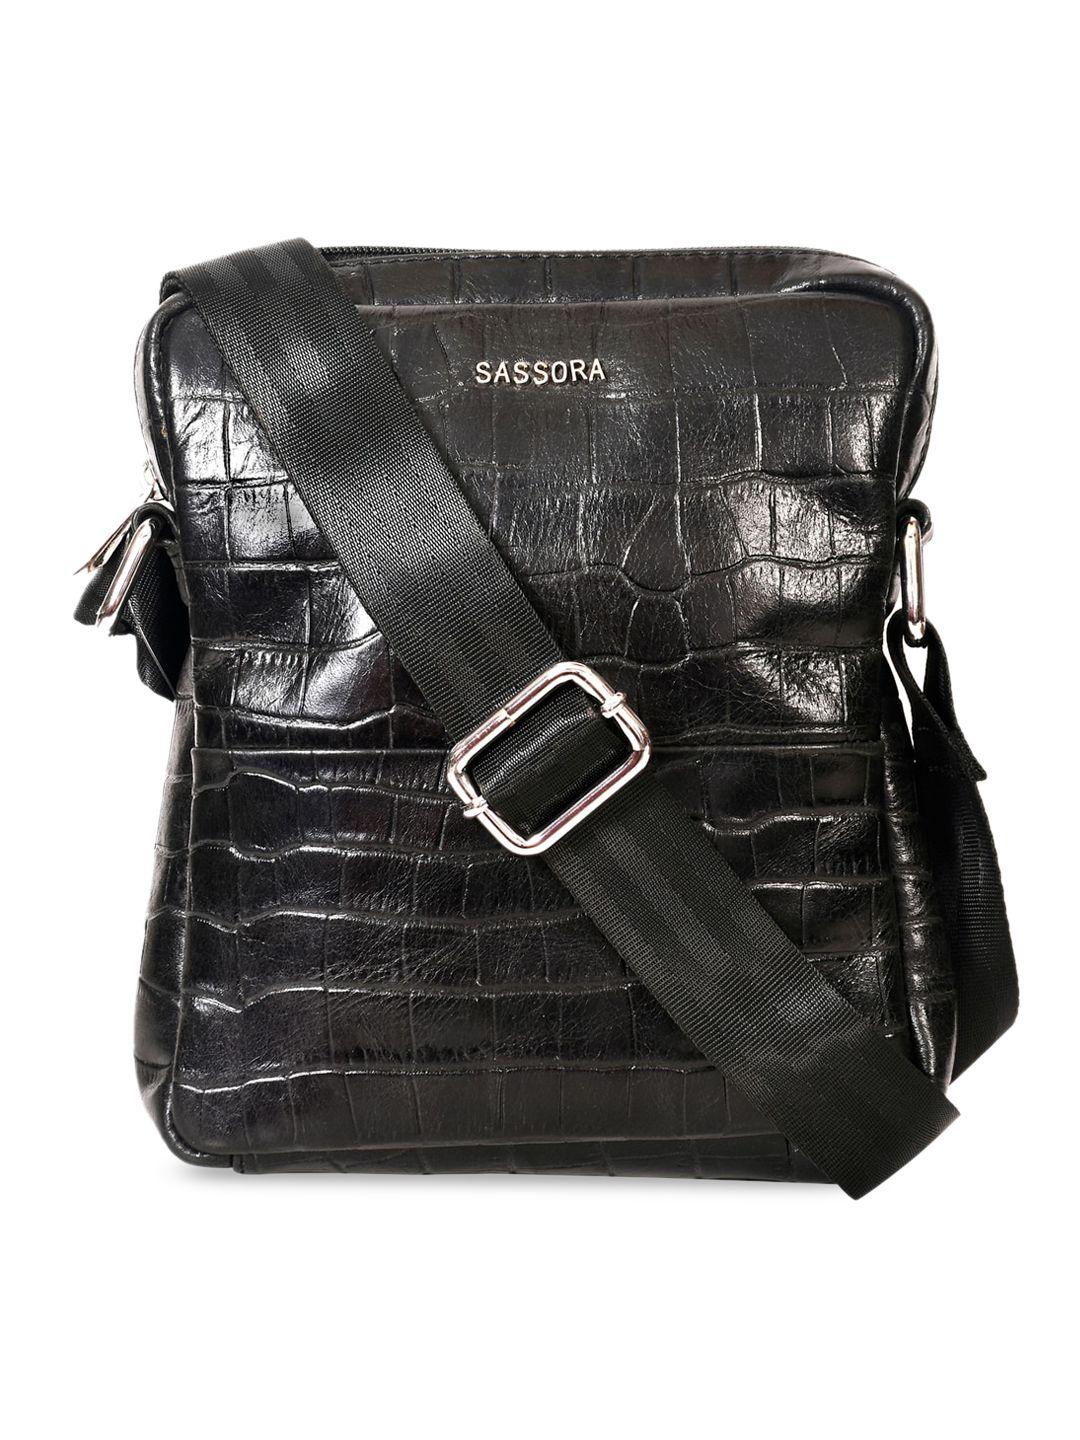 sassora black animal textured leather structured sling bag